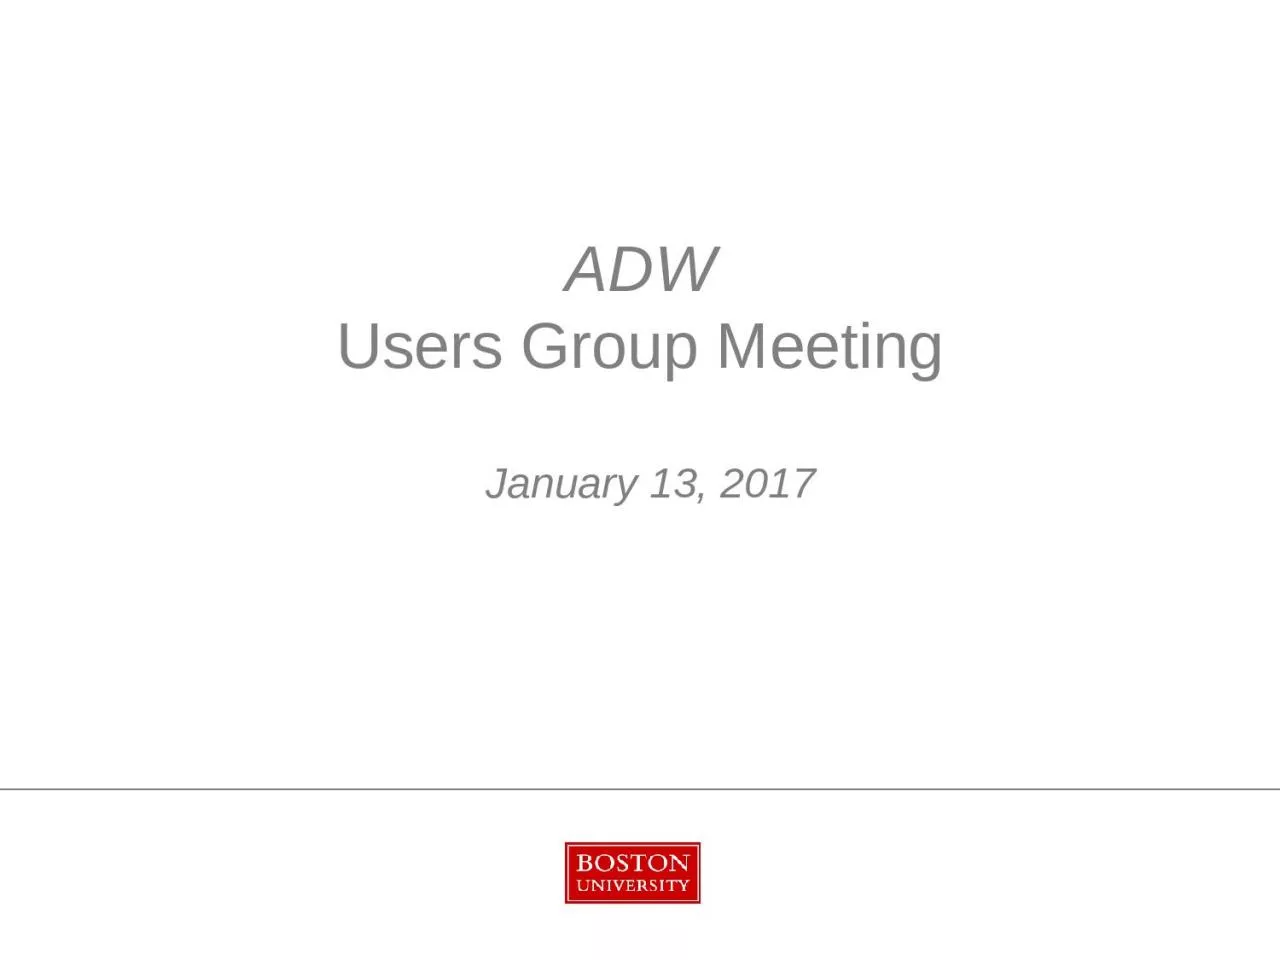 ADW Users Group Meeting January 13, 2017